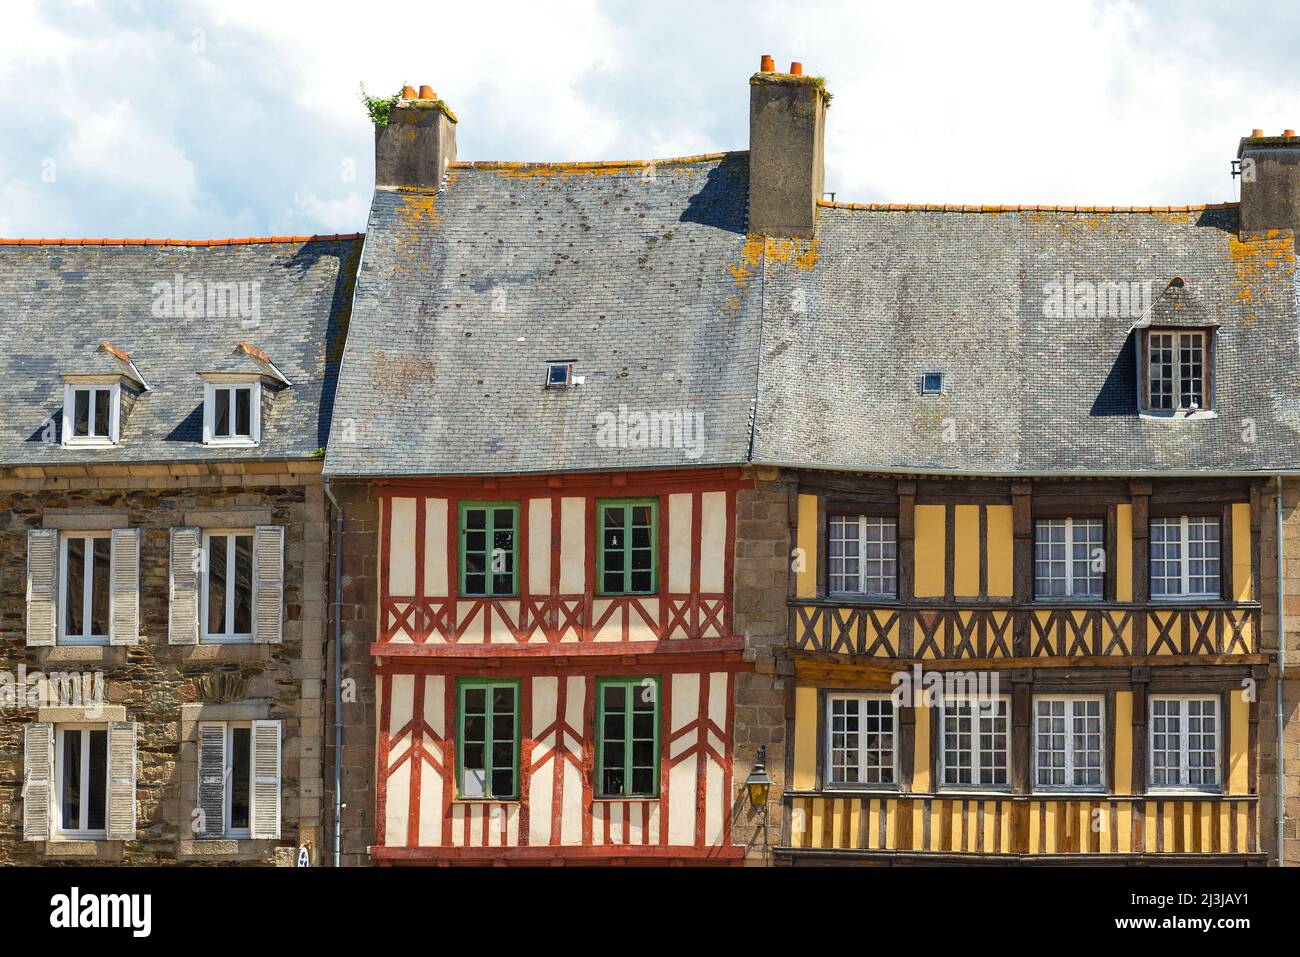 Casas históricas con entramado de madera en el pintoresco casco antiguo de Tréguier, Francia, Bretaña, departamento de Côtes d'Armor Foto de stock